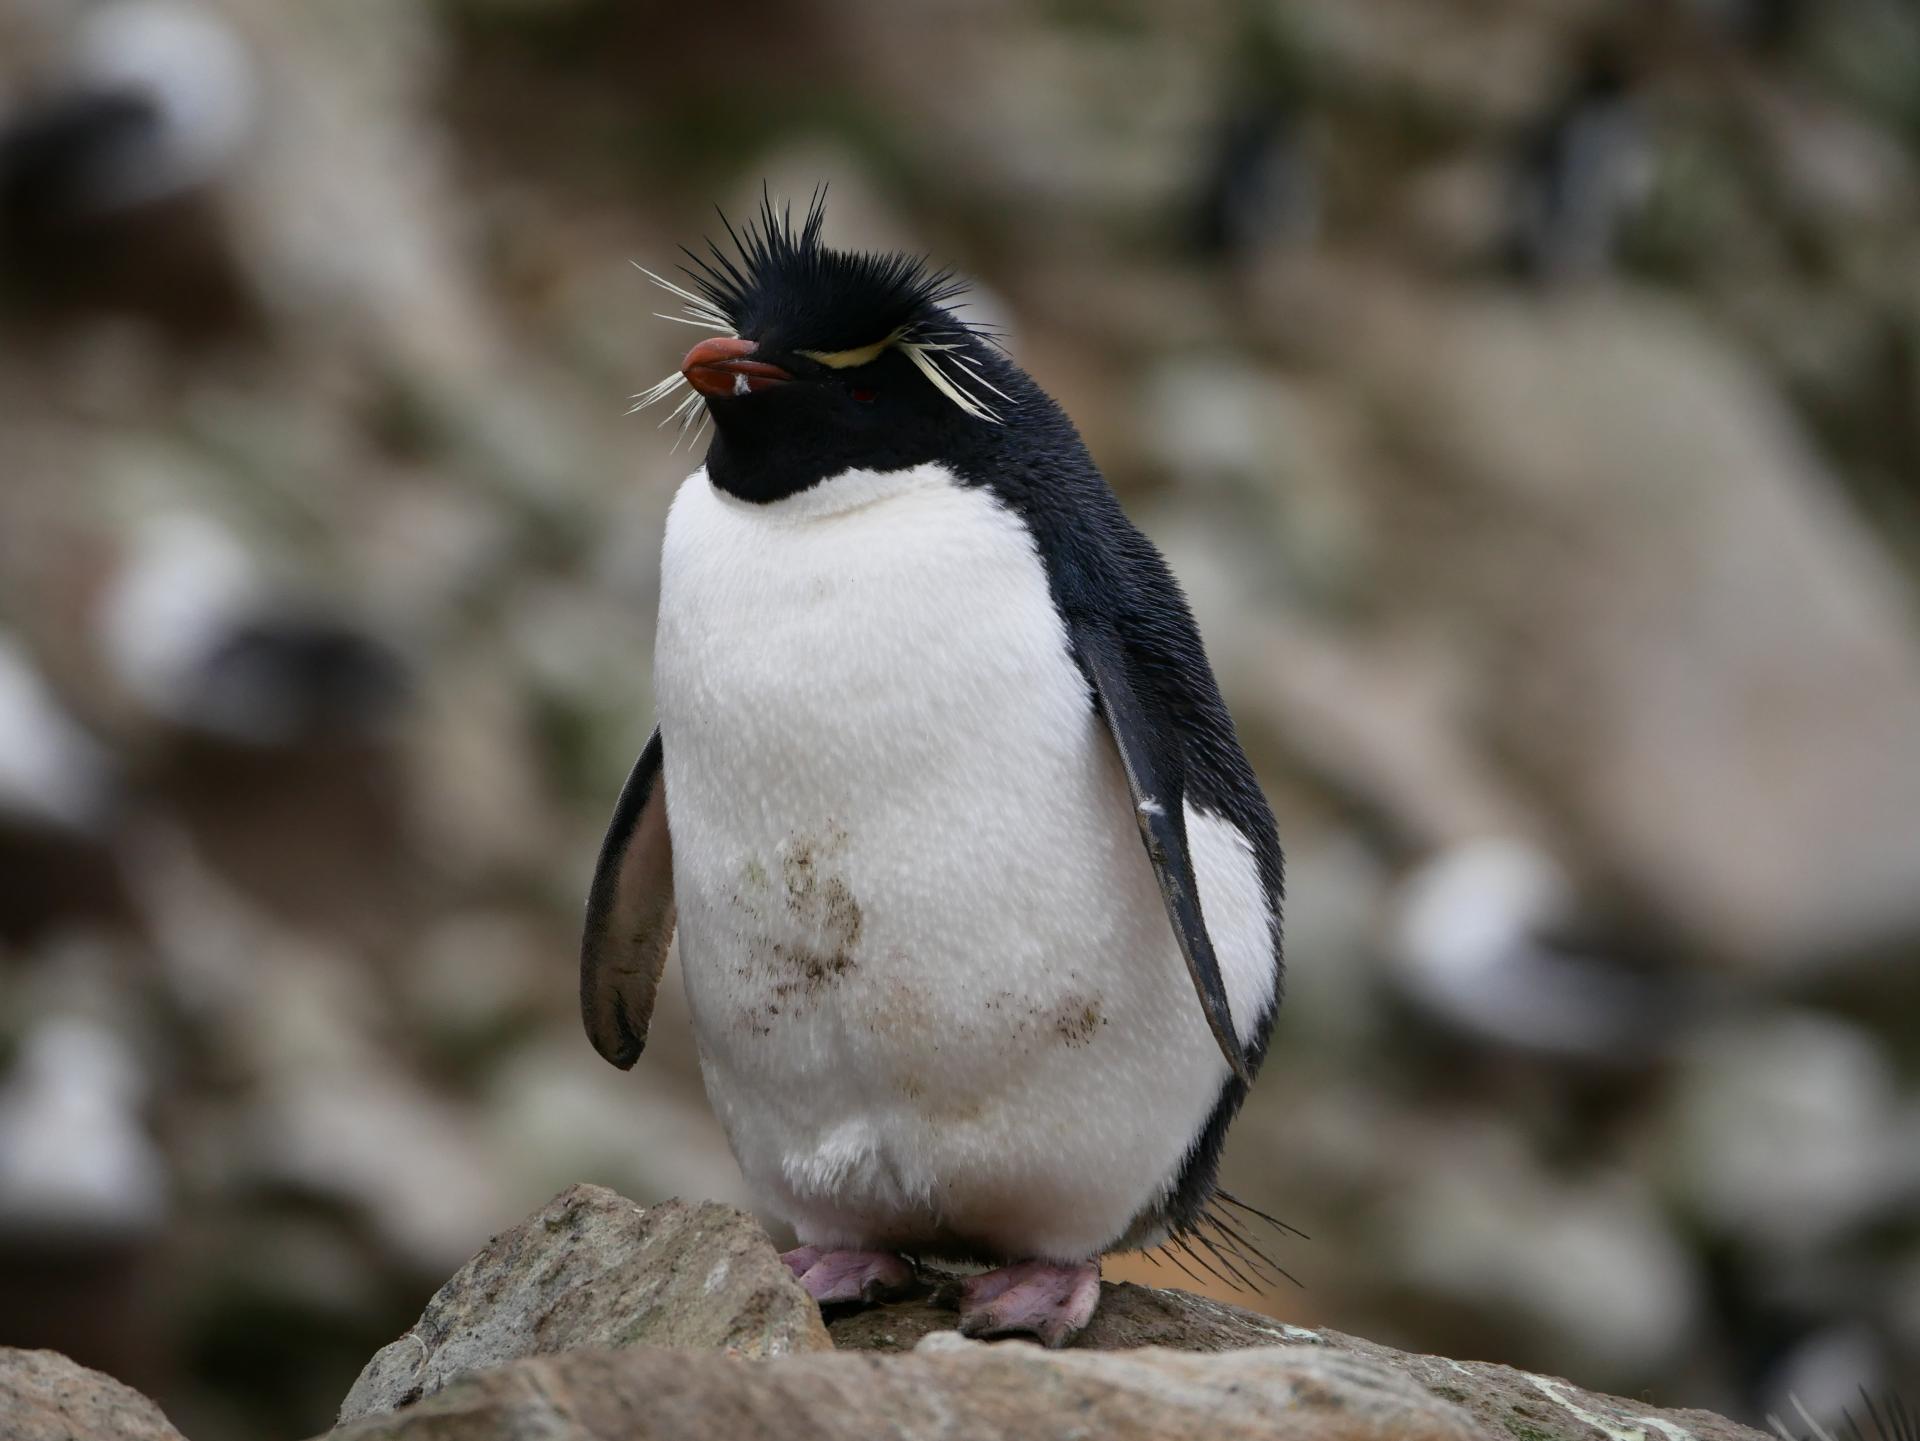 Wild Nature between Argentina and the Falkland Islands